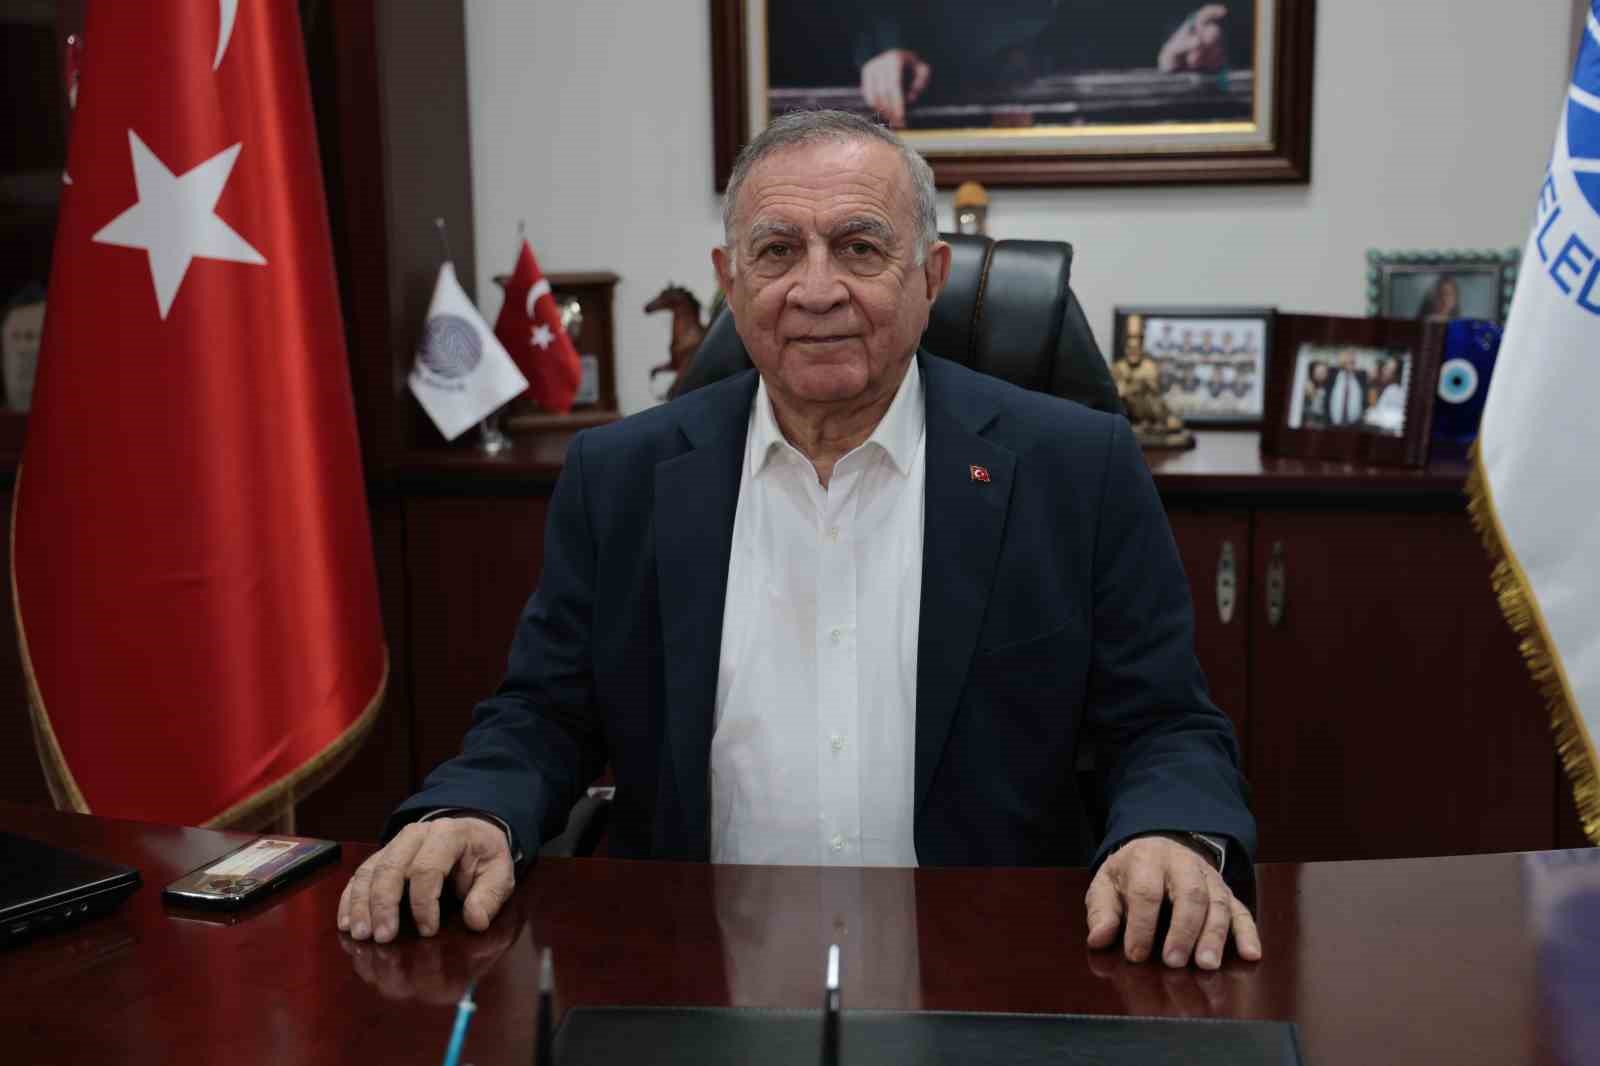 CHP’den istifa eden Başkan Akay: “CHP’nin kimliği kayboldu”